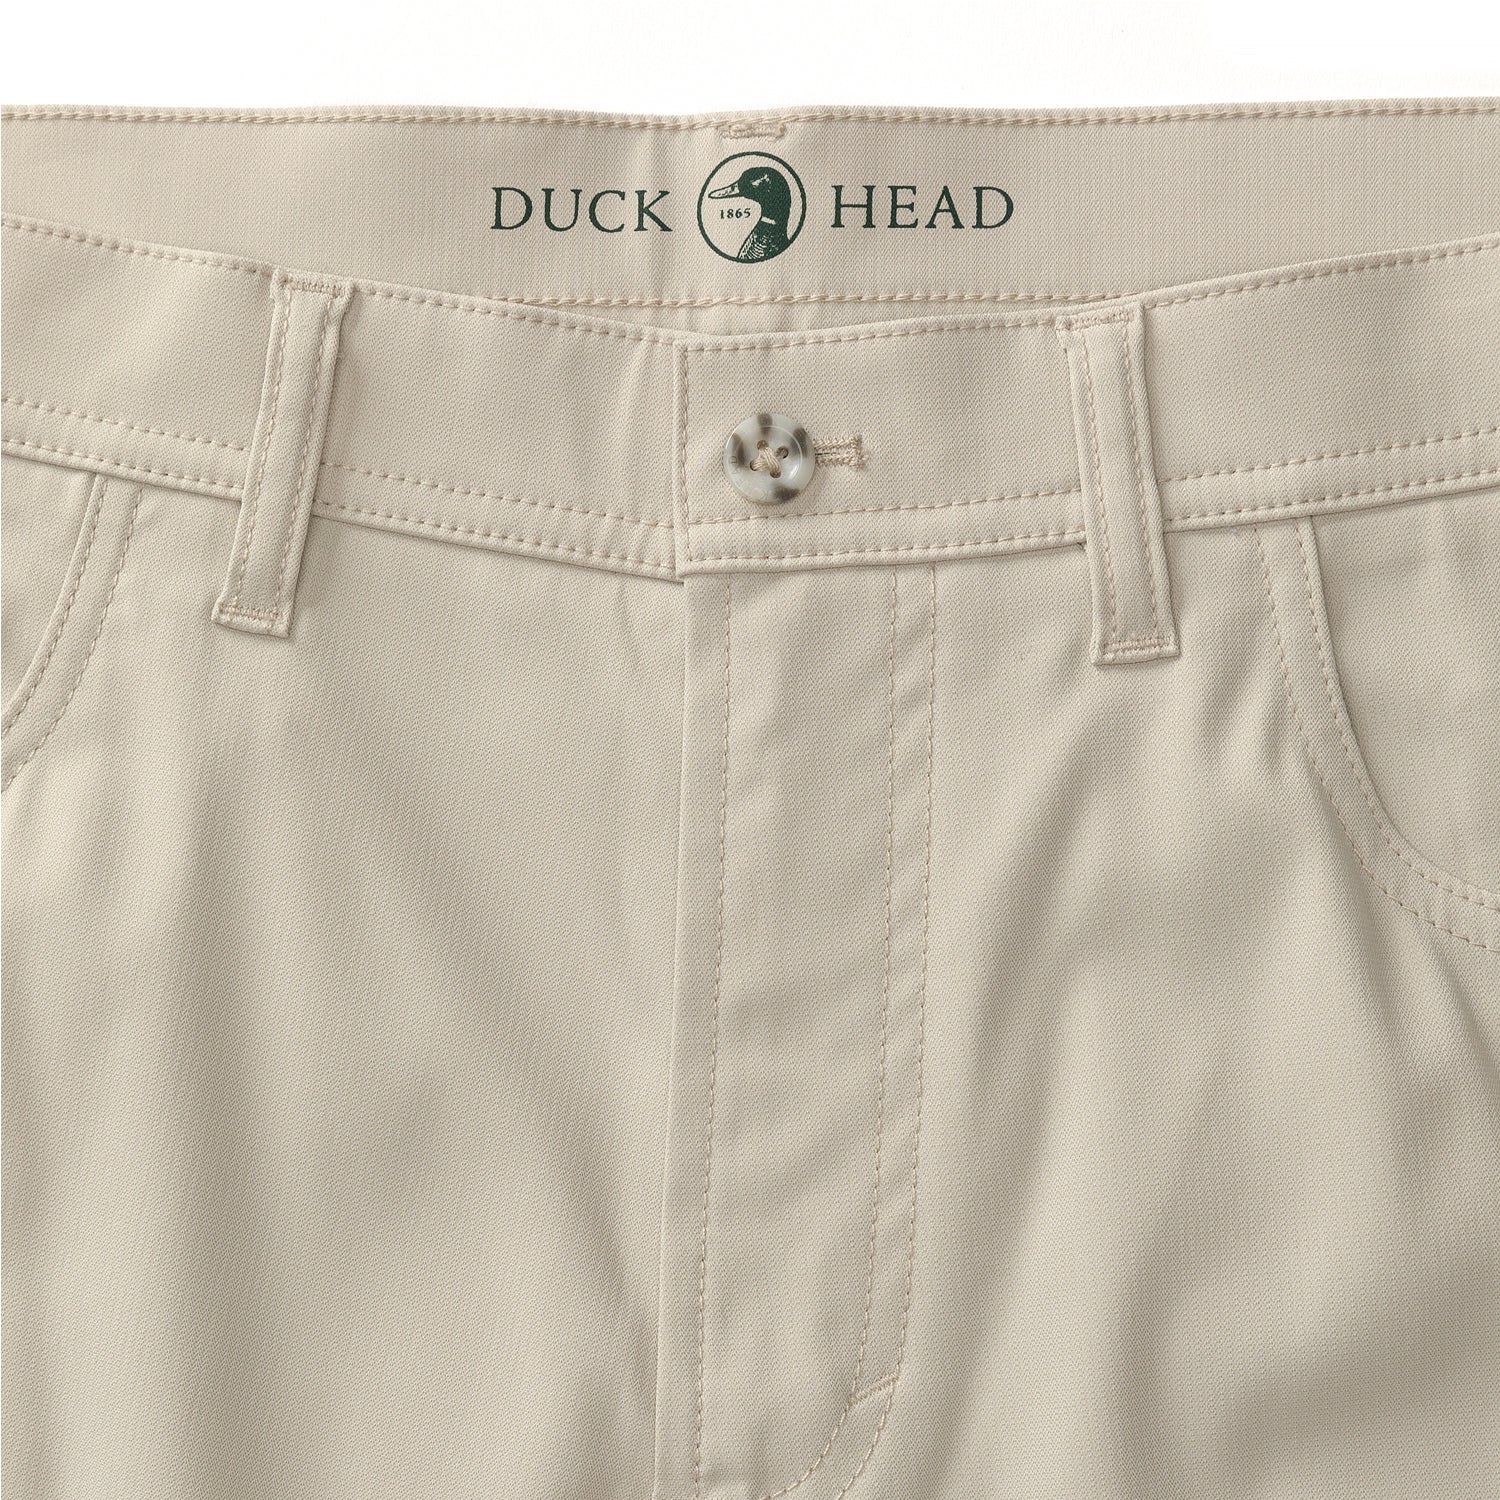 Duck Head Shoreline Twill 5-Pocket Pants in Washed Navy - Men's 36 / 32